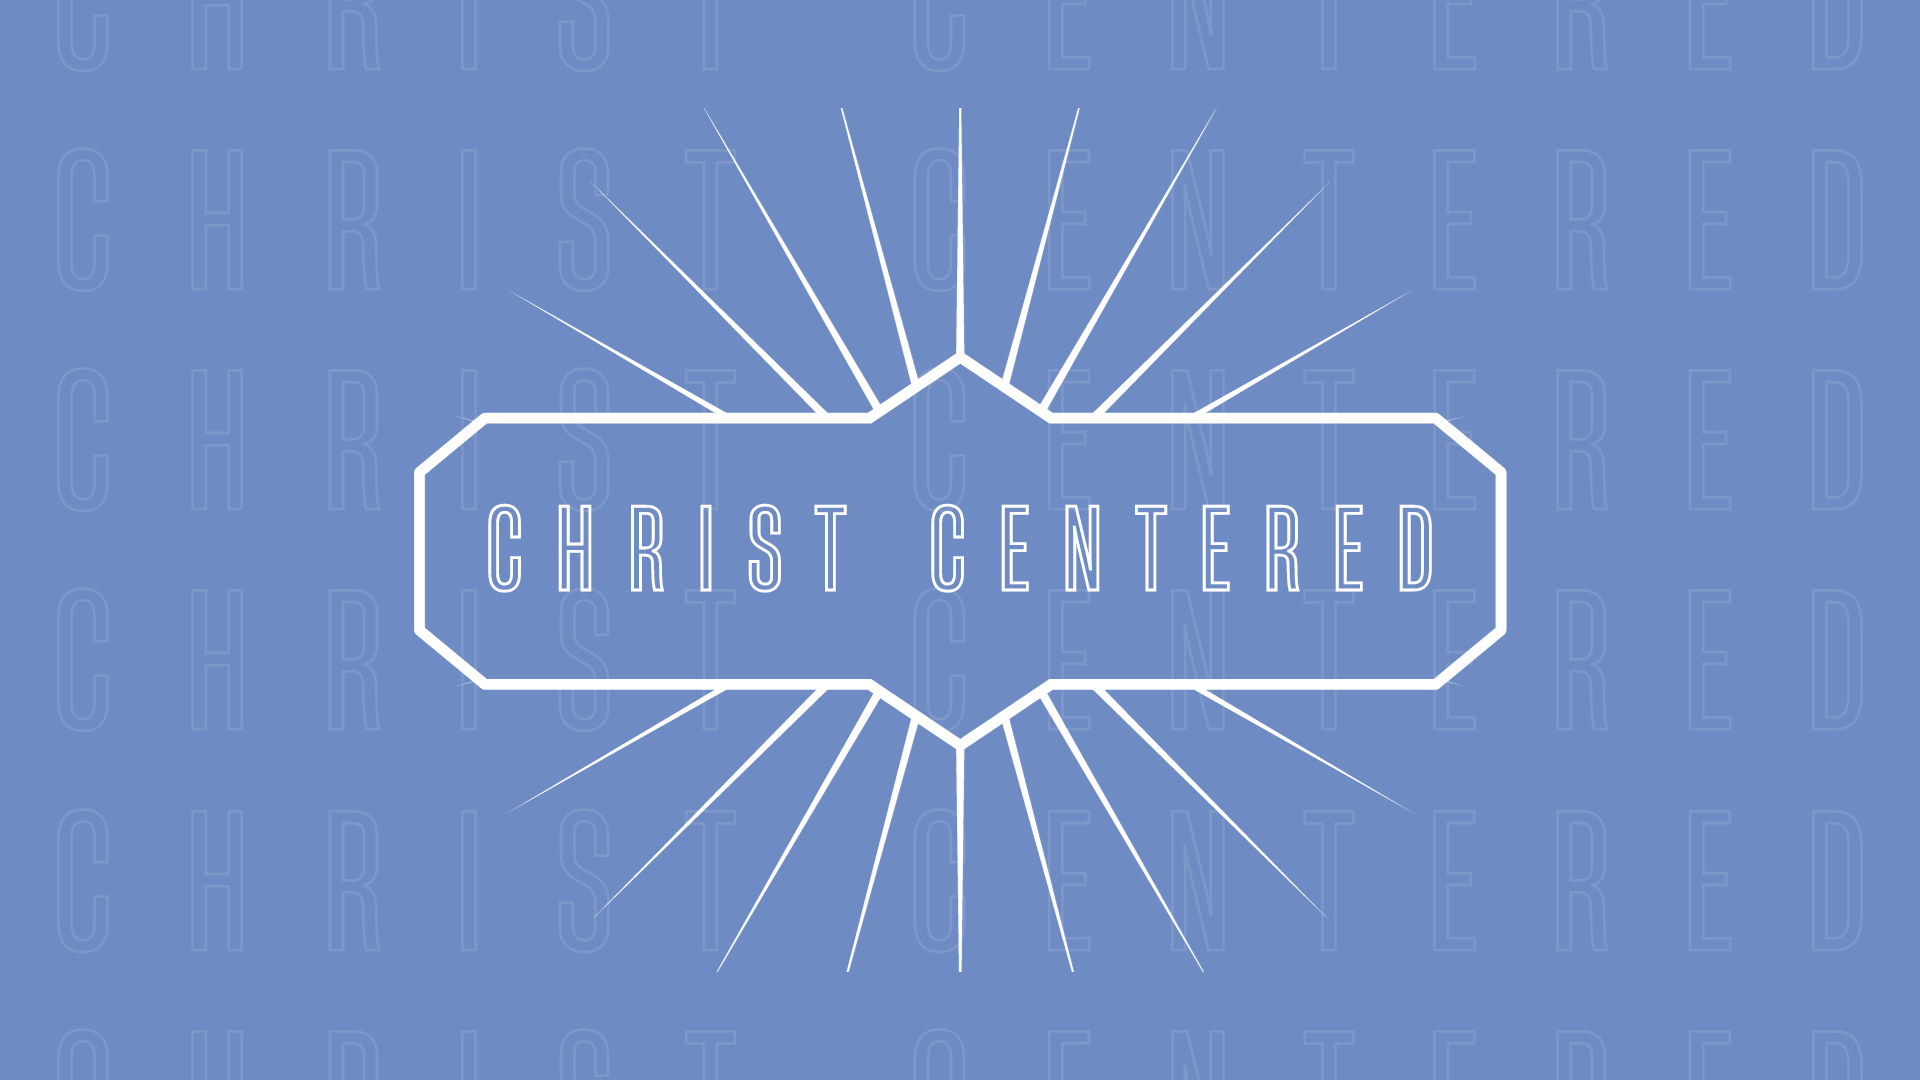 Christ Centered Parenting